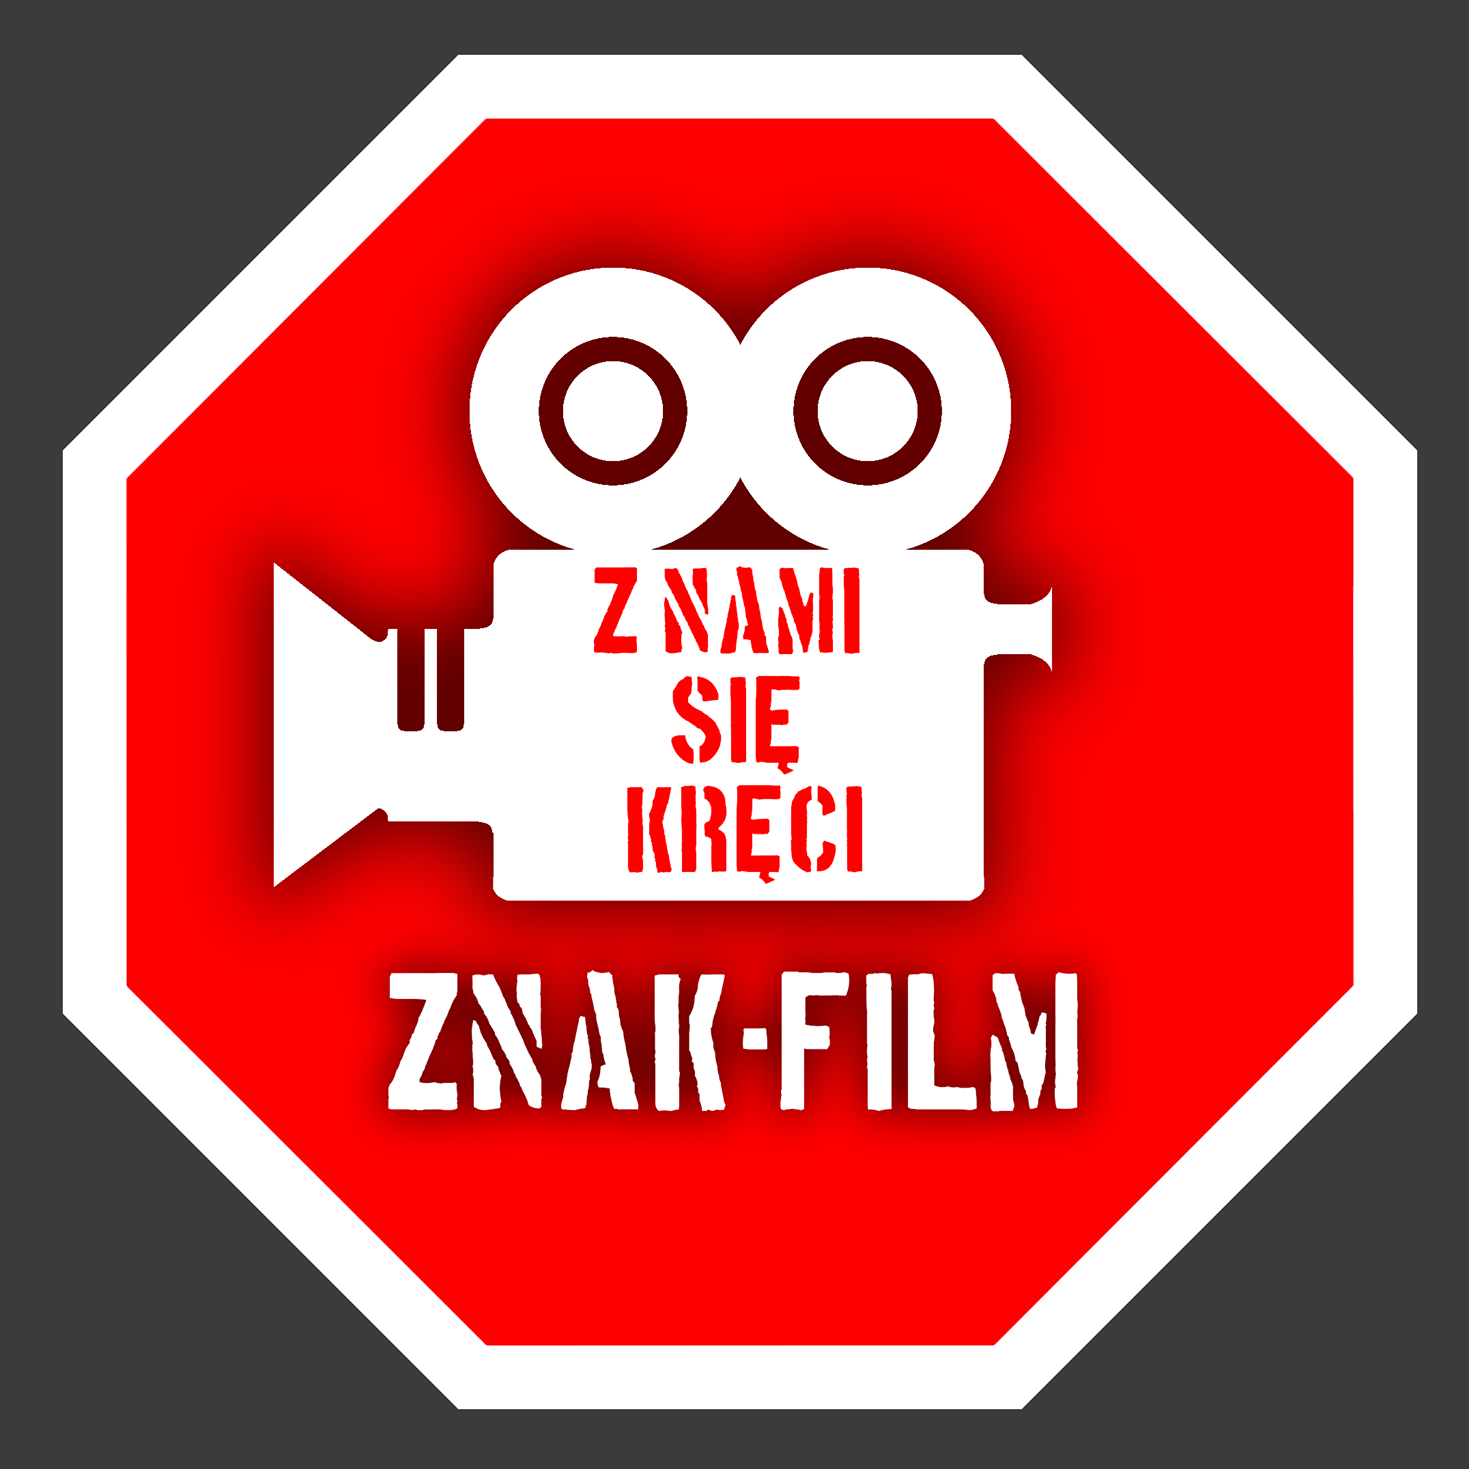 Znak Film – film set service